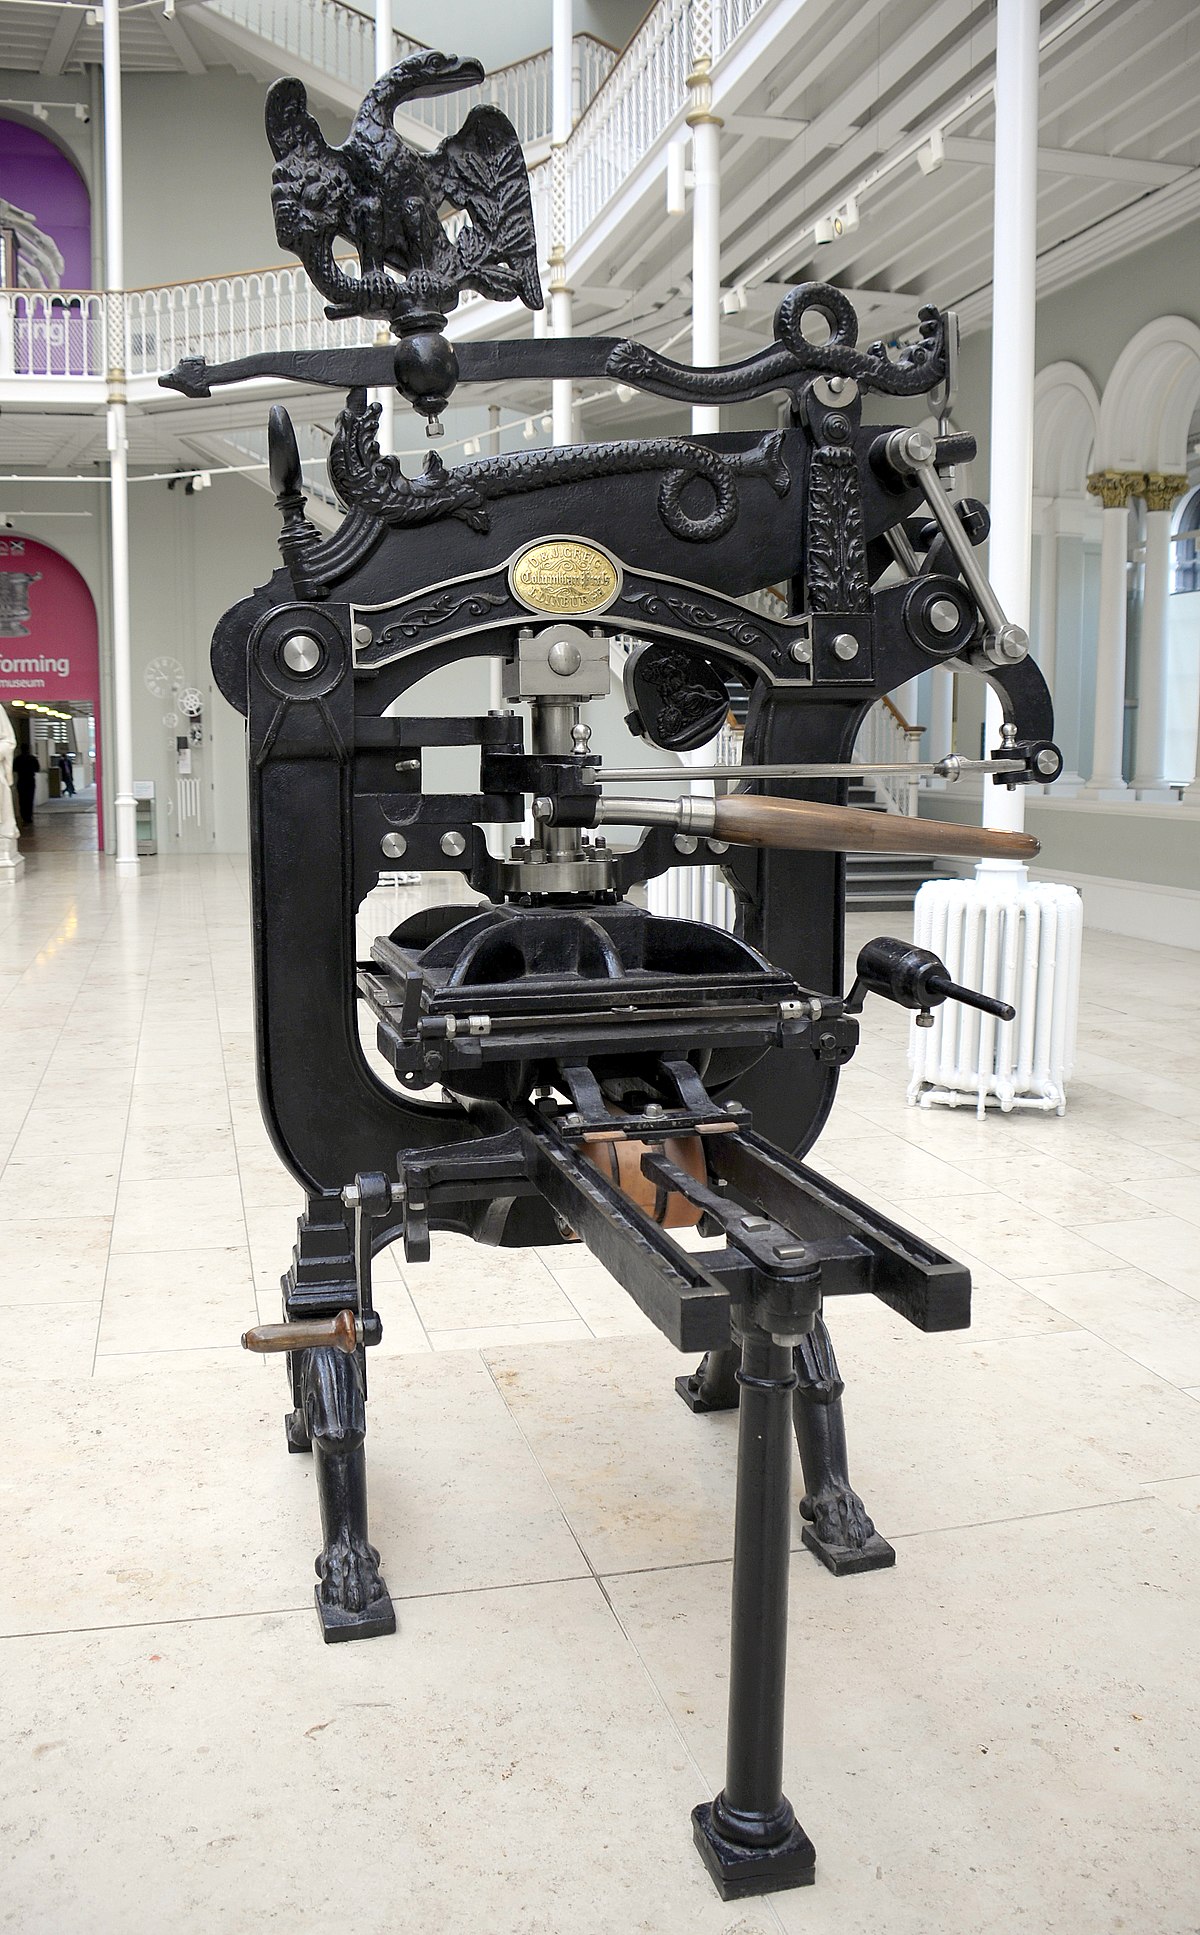 Printing press - Wikipedia